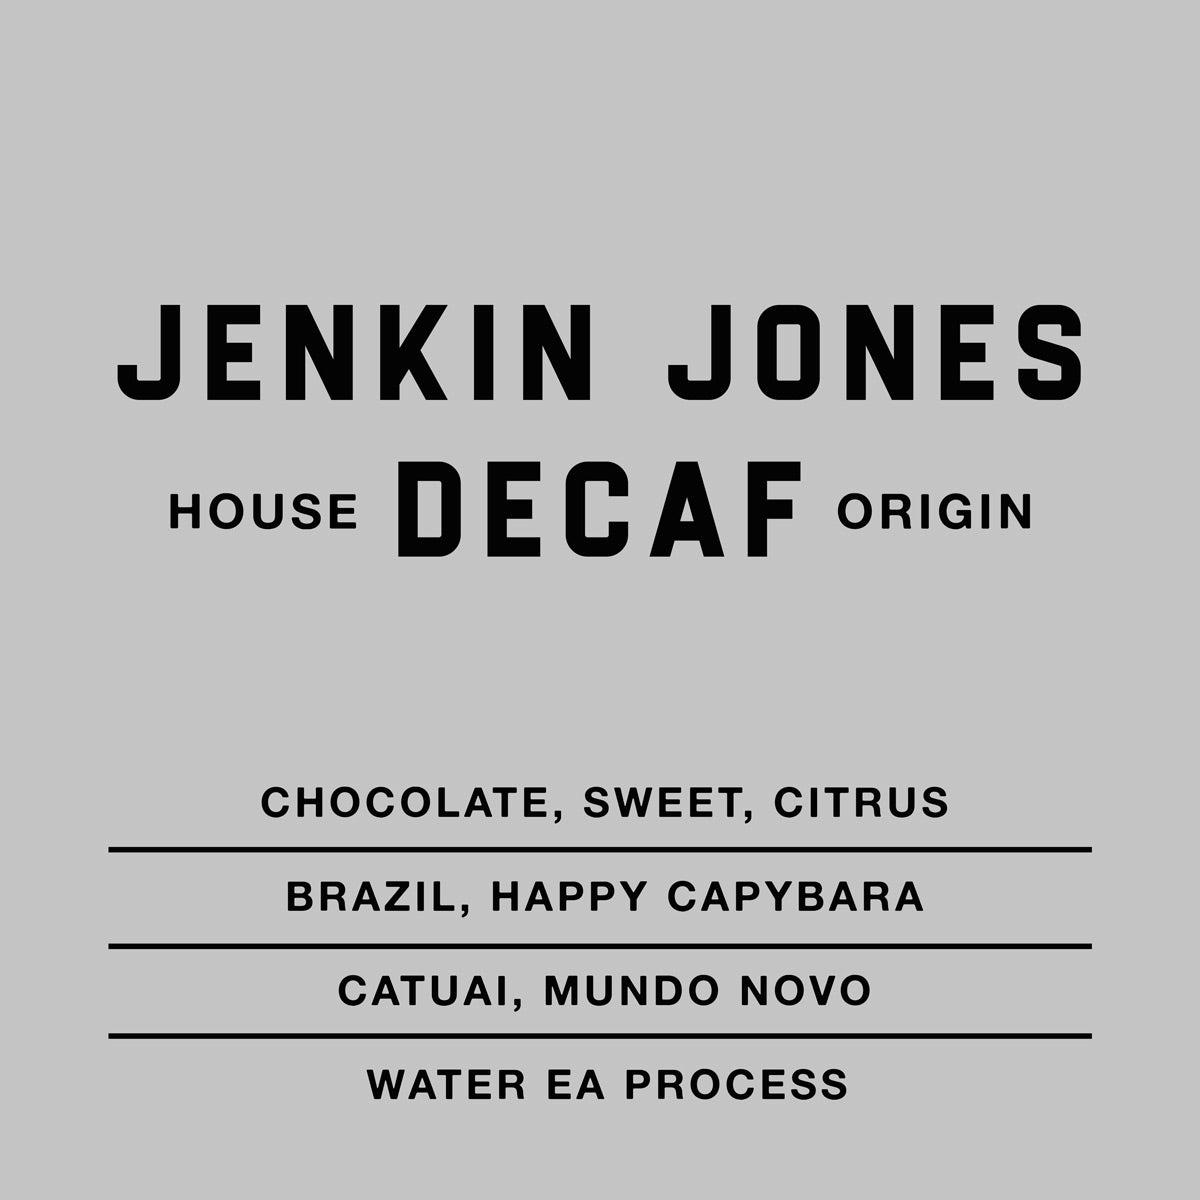 Jenkin-Jones-Decaf-House-Origin-Coaltown-Coffee